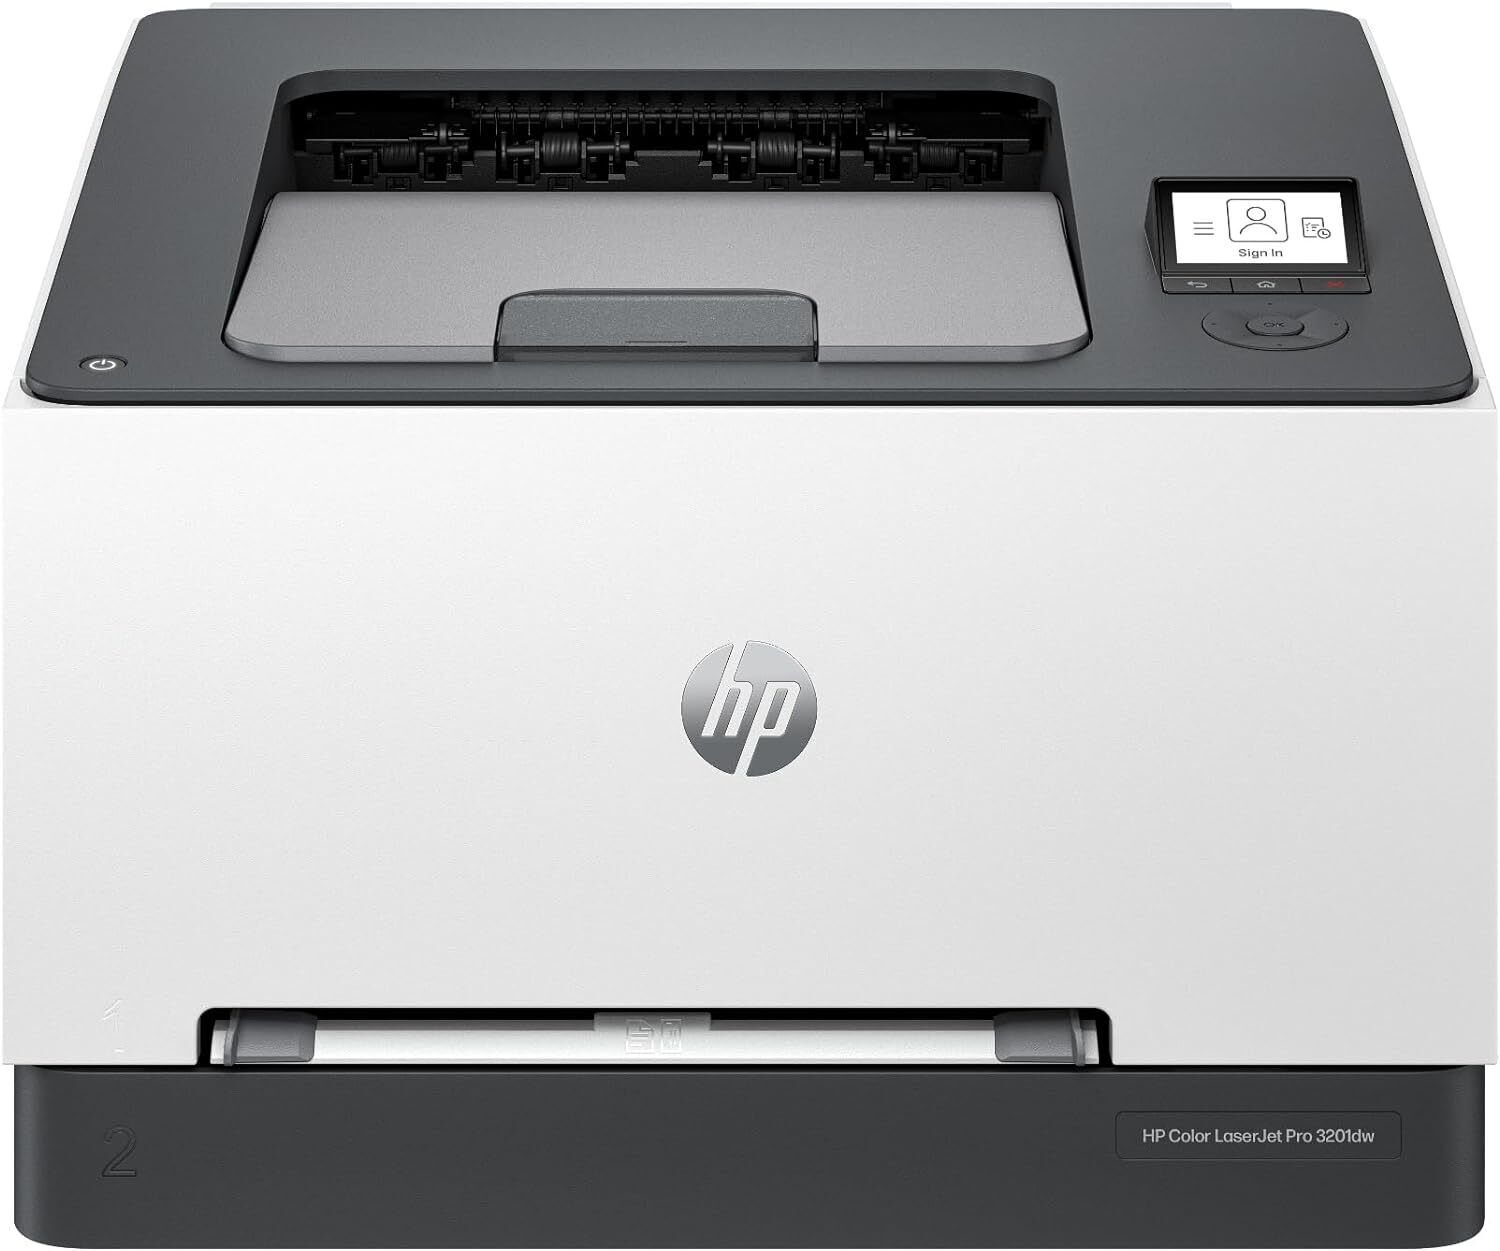 Brand New HP Color Laserjet Pro 3201DW Wireless Color Laser Printer Office&Home